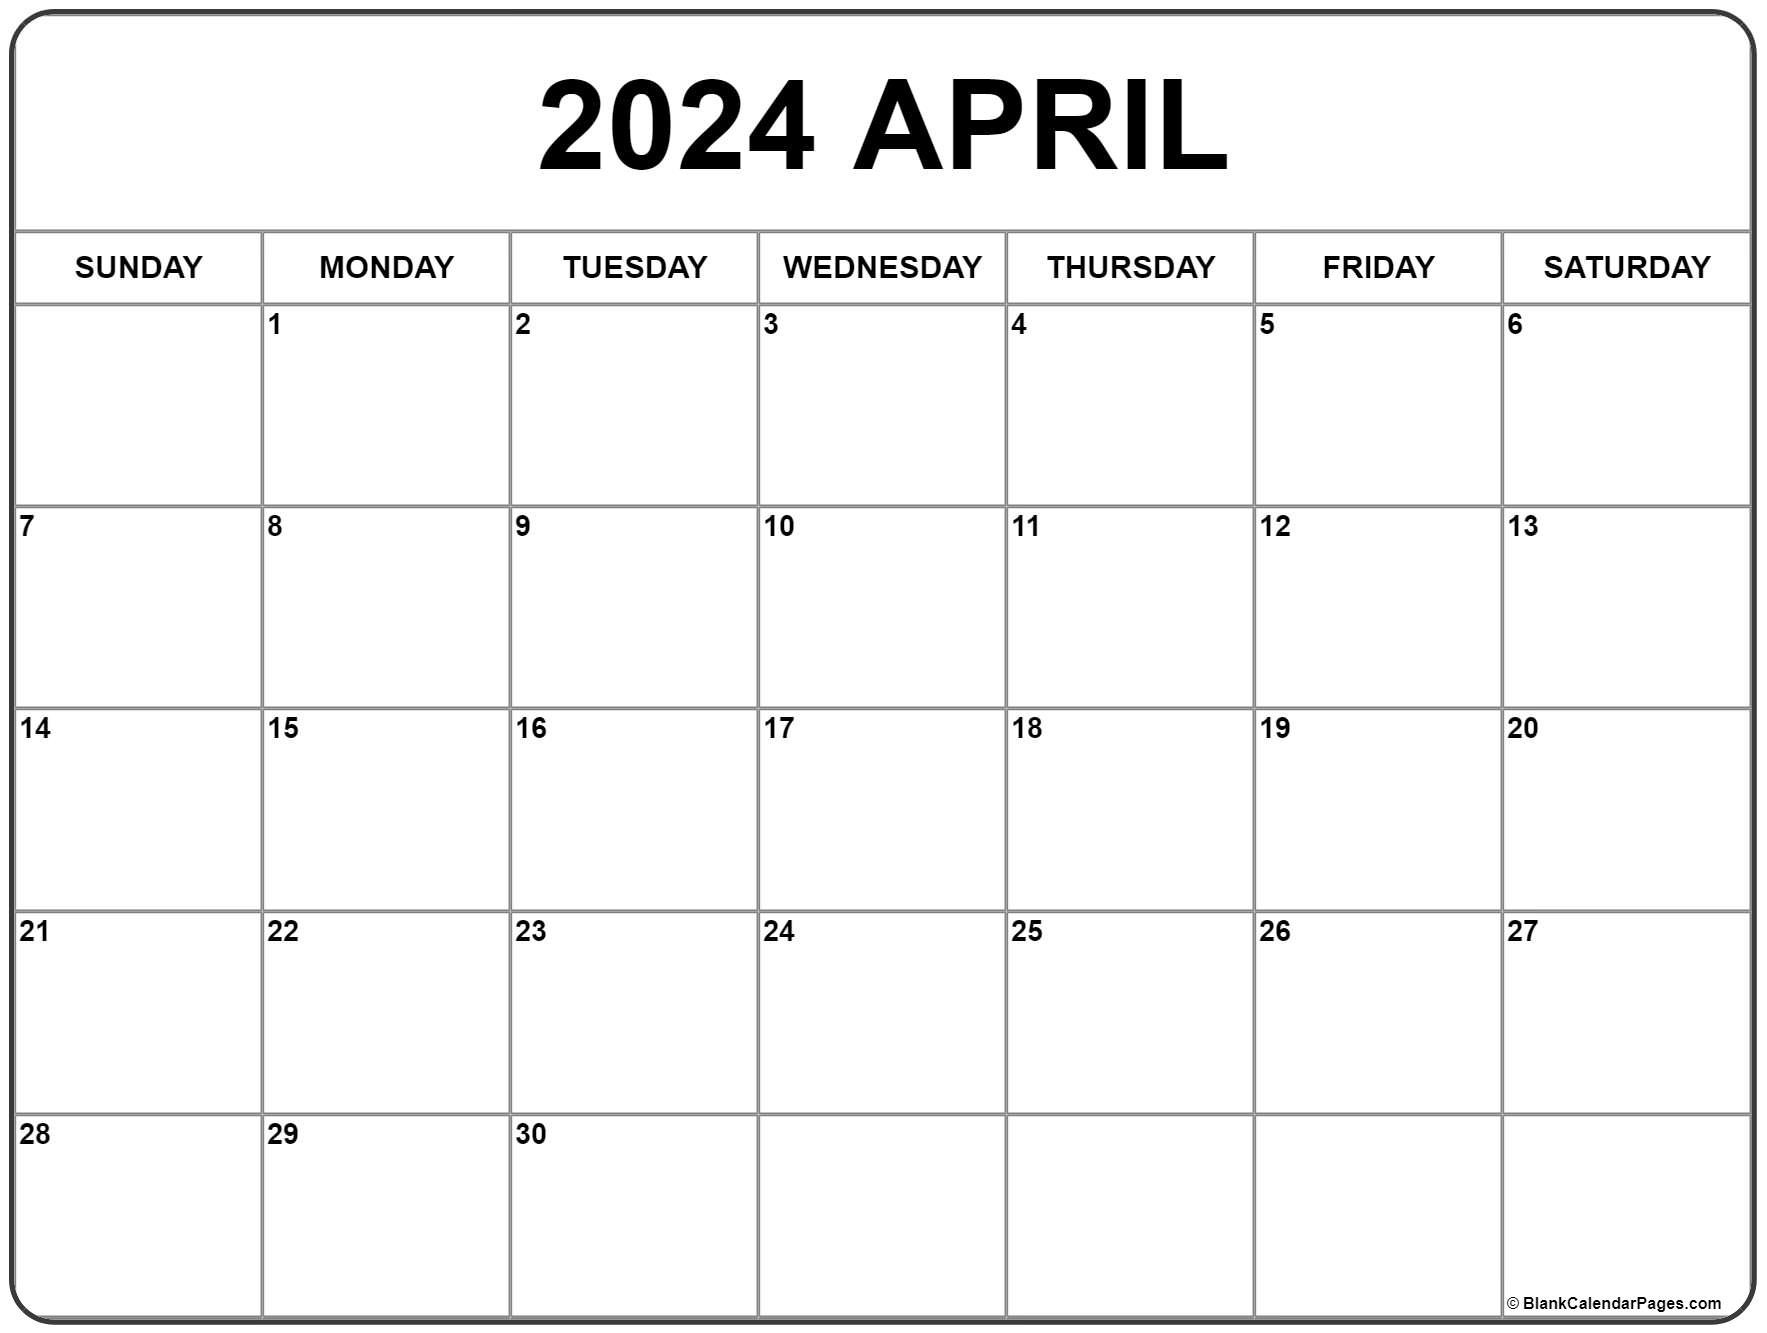 April 2024 Calendar | Free Printable Calendar in Blank Calendar 2024 April